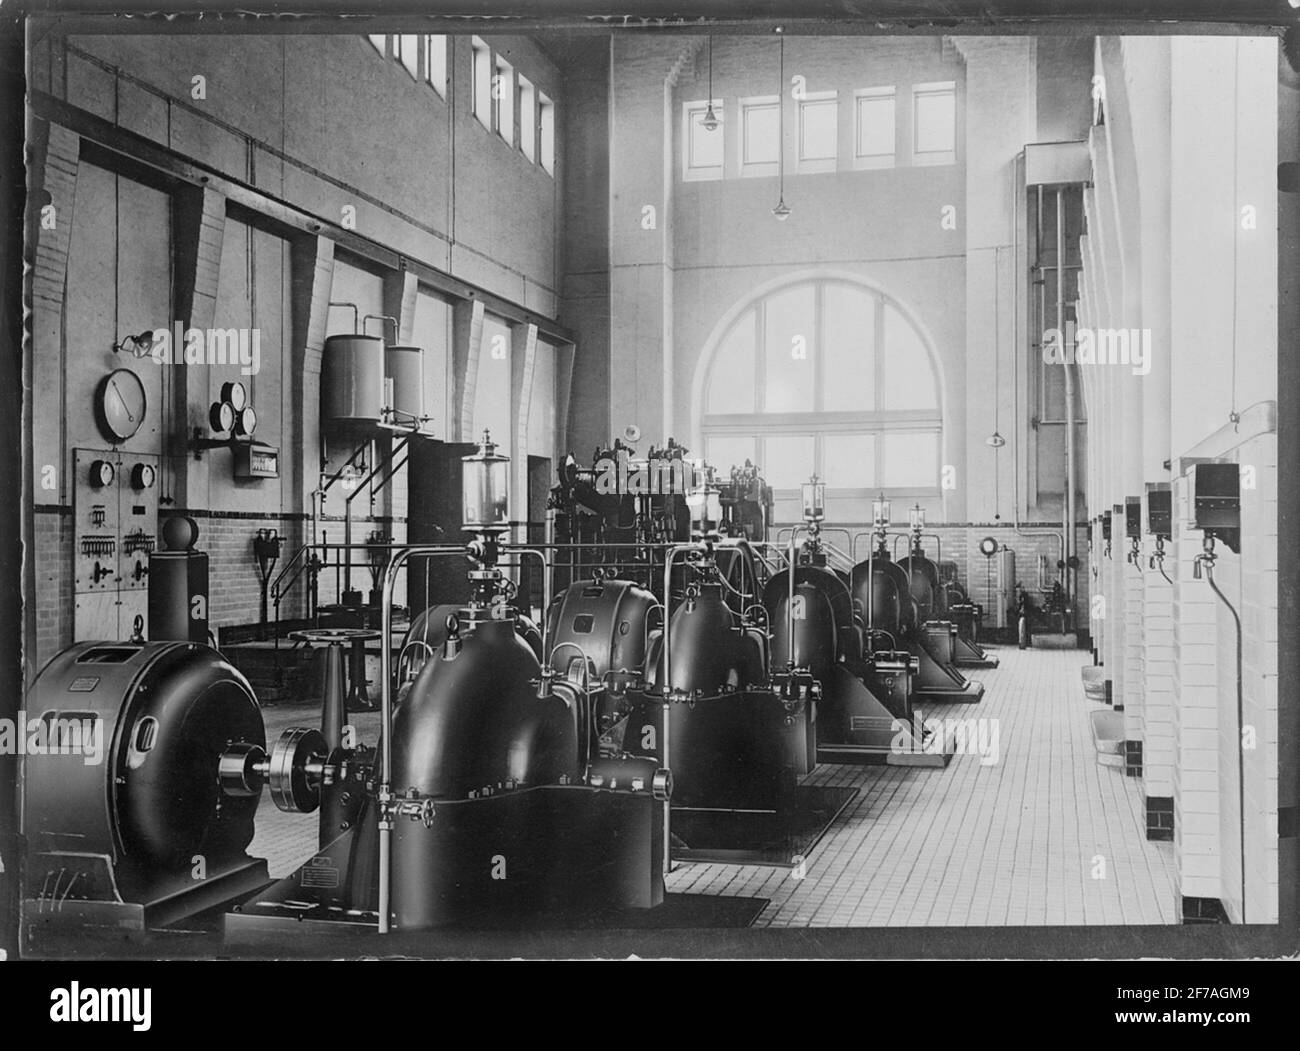 Steam generators? AB de Laval's steam turbine Stock Photo - Alamy